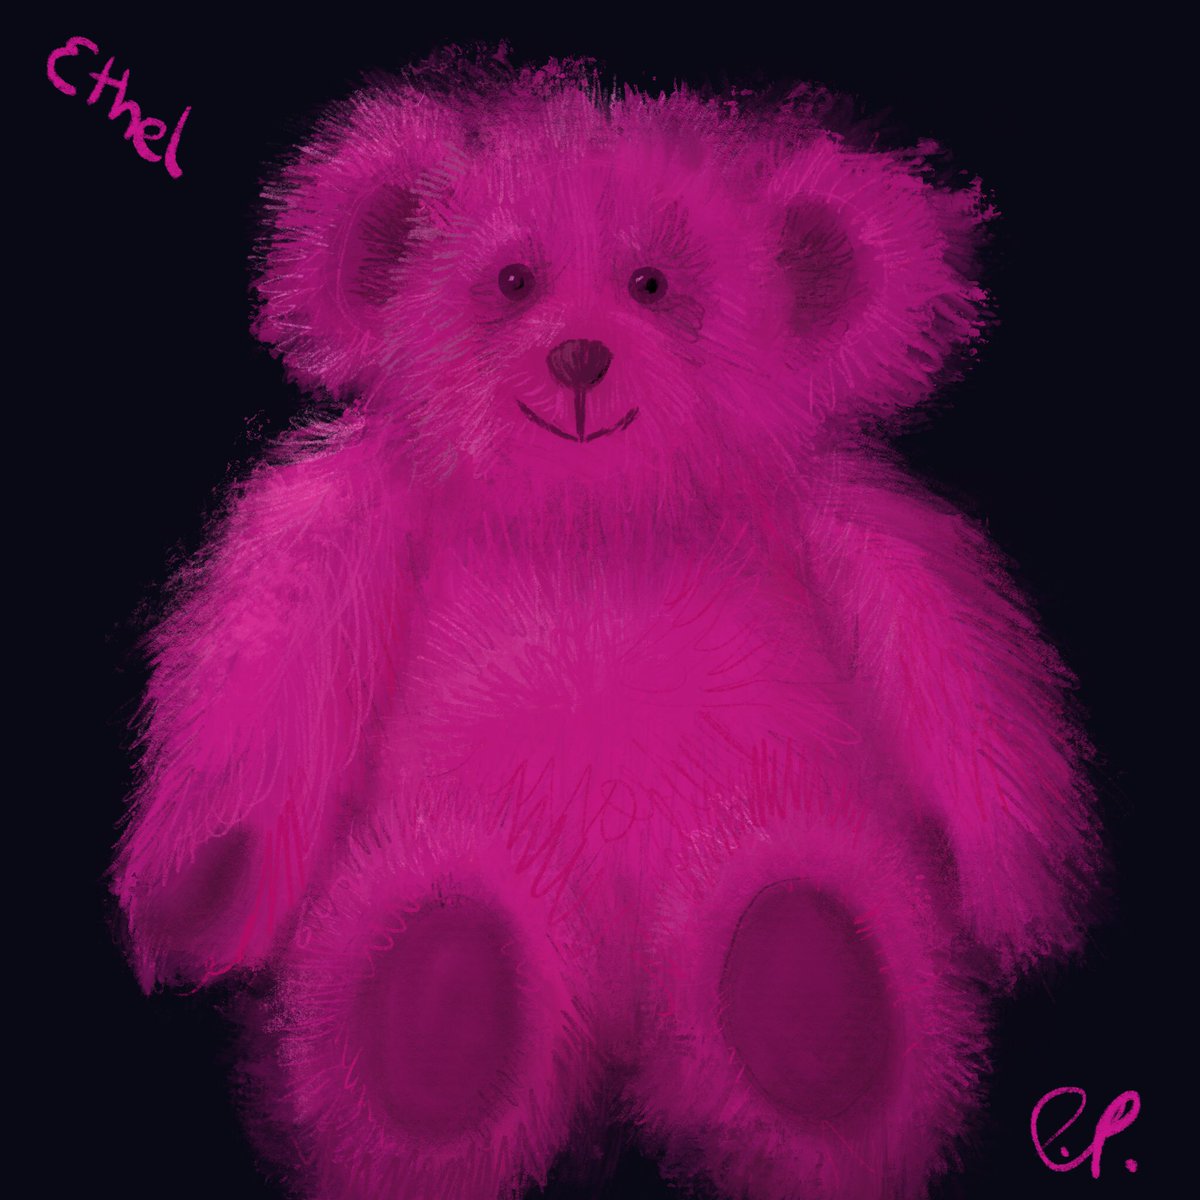 ‘Ethel’ A kindly bear! #art #digitalart #digitaldrawing #digitalpainting #procreateart #bear #bears #bearsoftwitter #teddy #teddies #teddybear #teddybears #soft #cuddle #plush #plushies #plushie #mohairbear #pink #cute #sweet #bearfriends